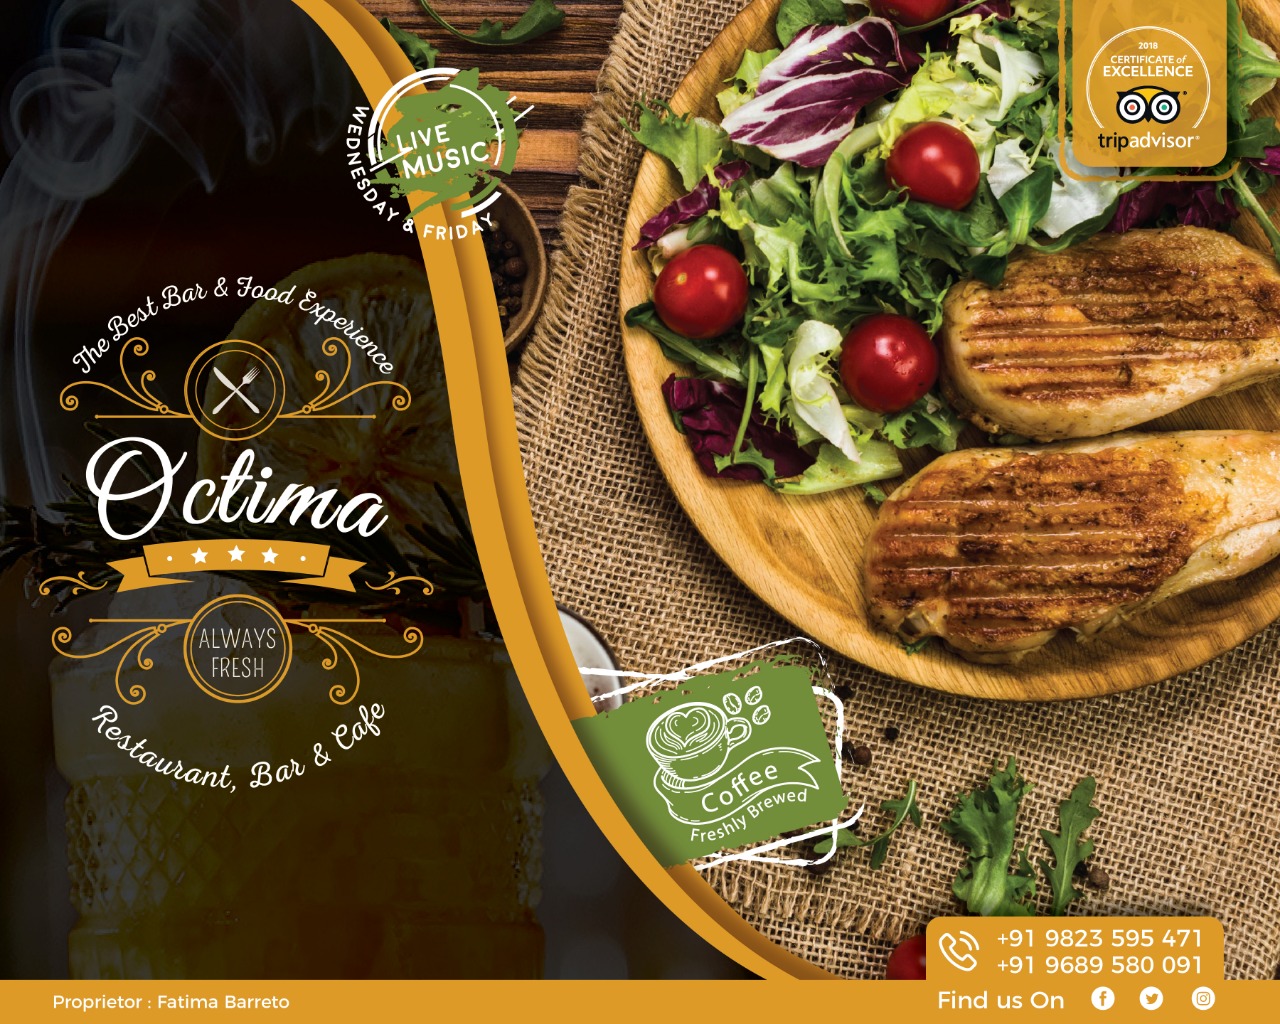 Octima restaurant, bar & cafe | Best Restaurant in Cavelossim | Best Cafe/Top 5 Bar in Cavelossim